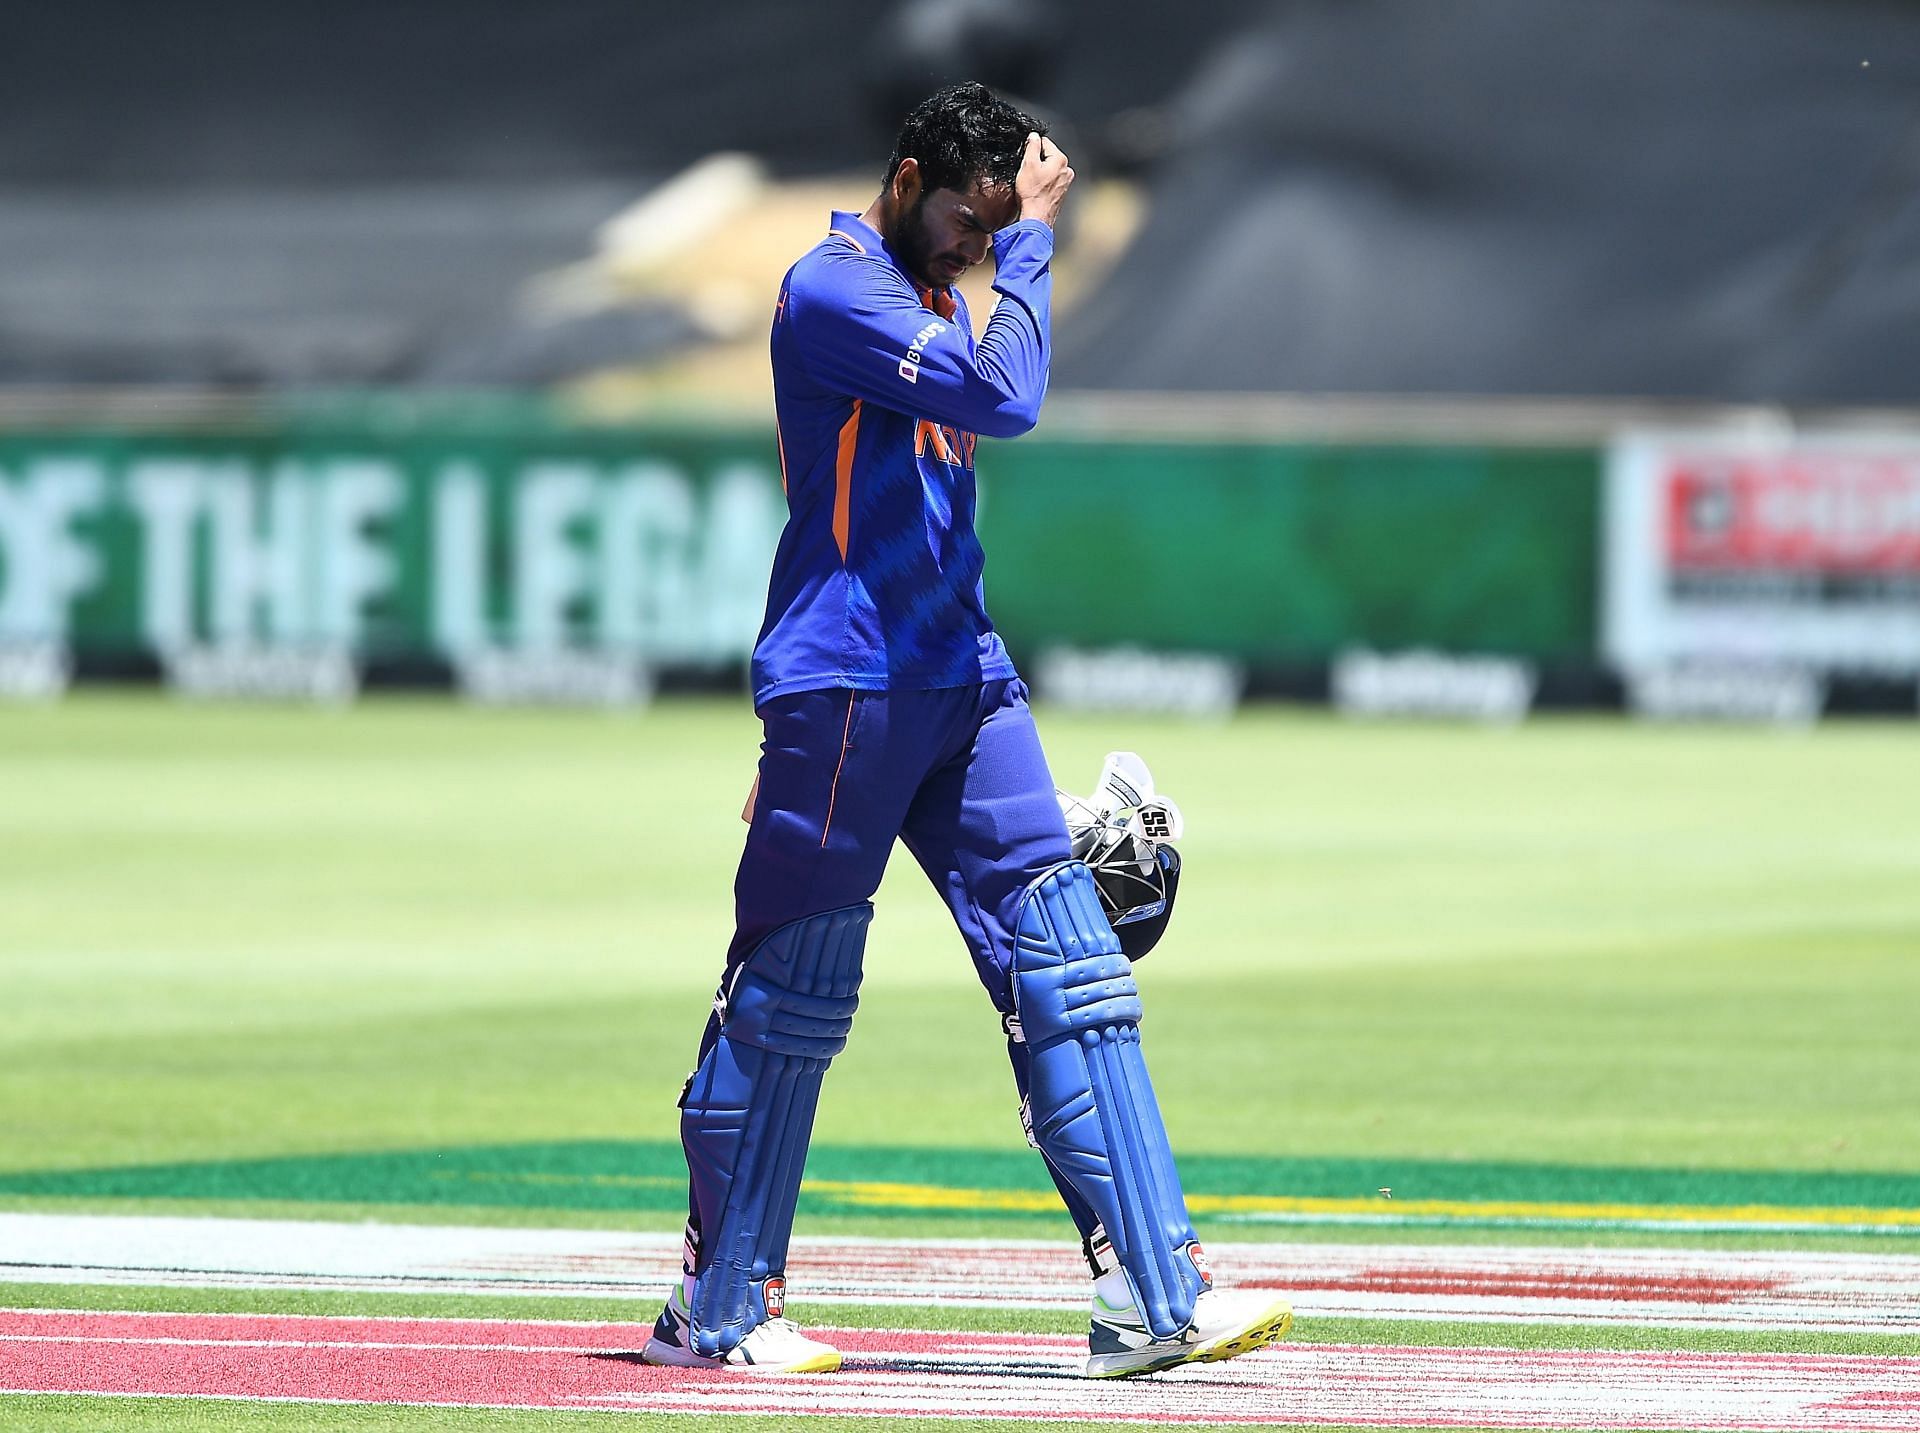 Venkatesh Iyer scored 24 runs and threw 5 passing balls in his debut ODI series